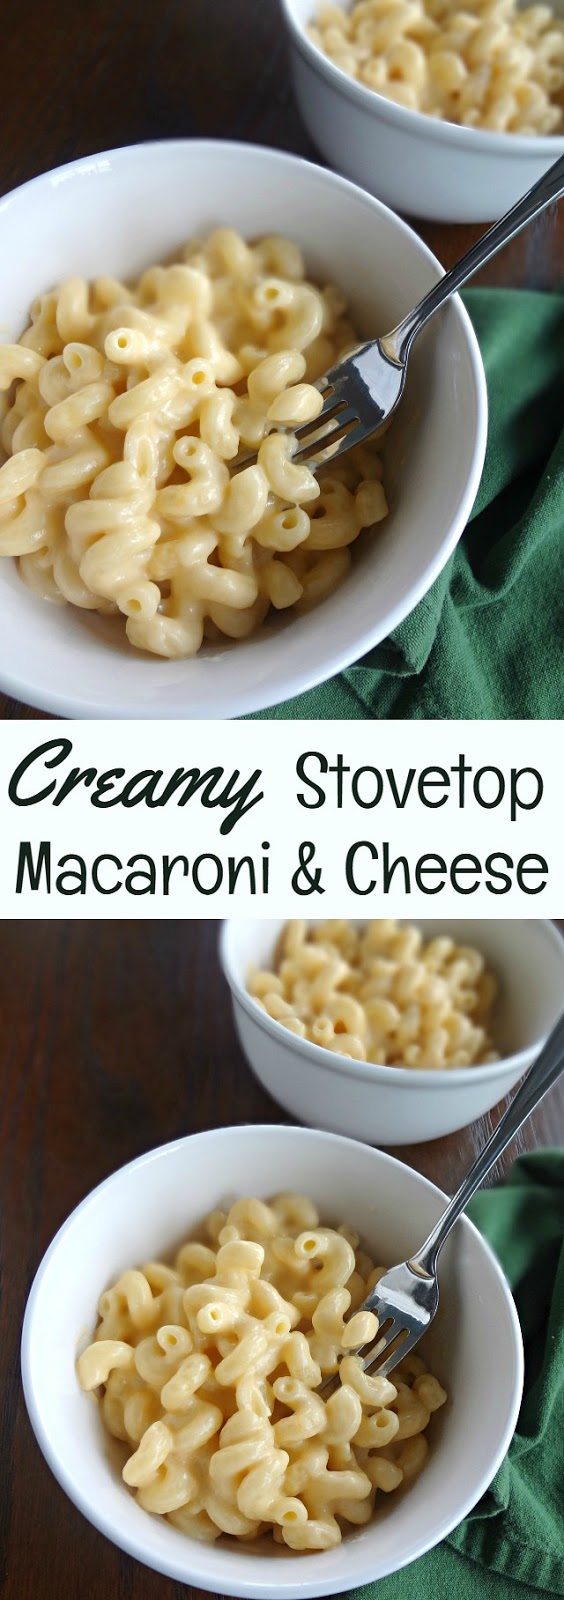 Creamy Stovetop Macaroni and Cheese